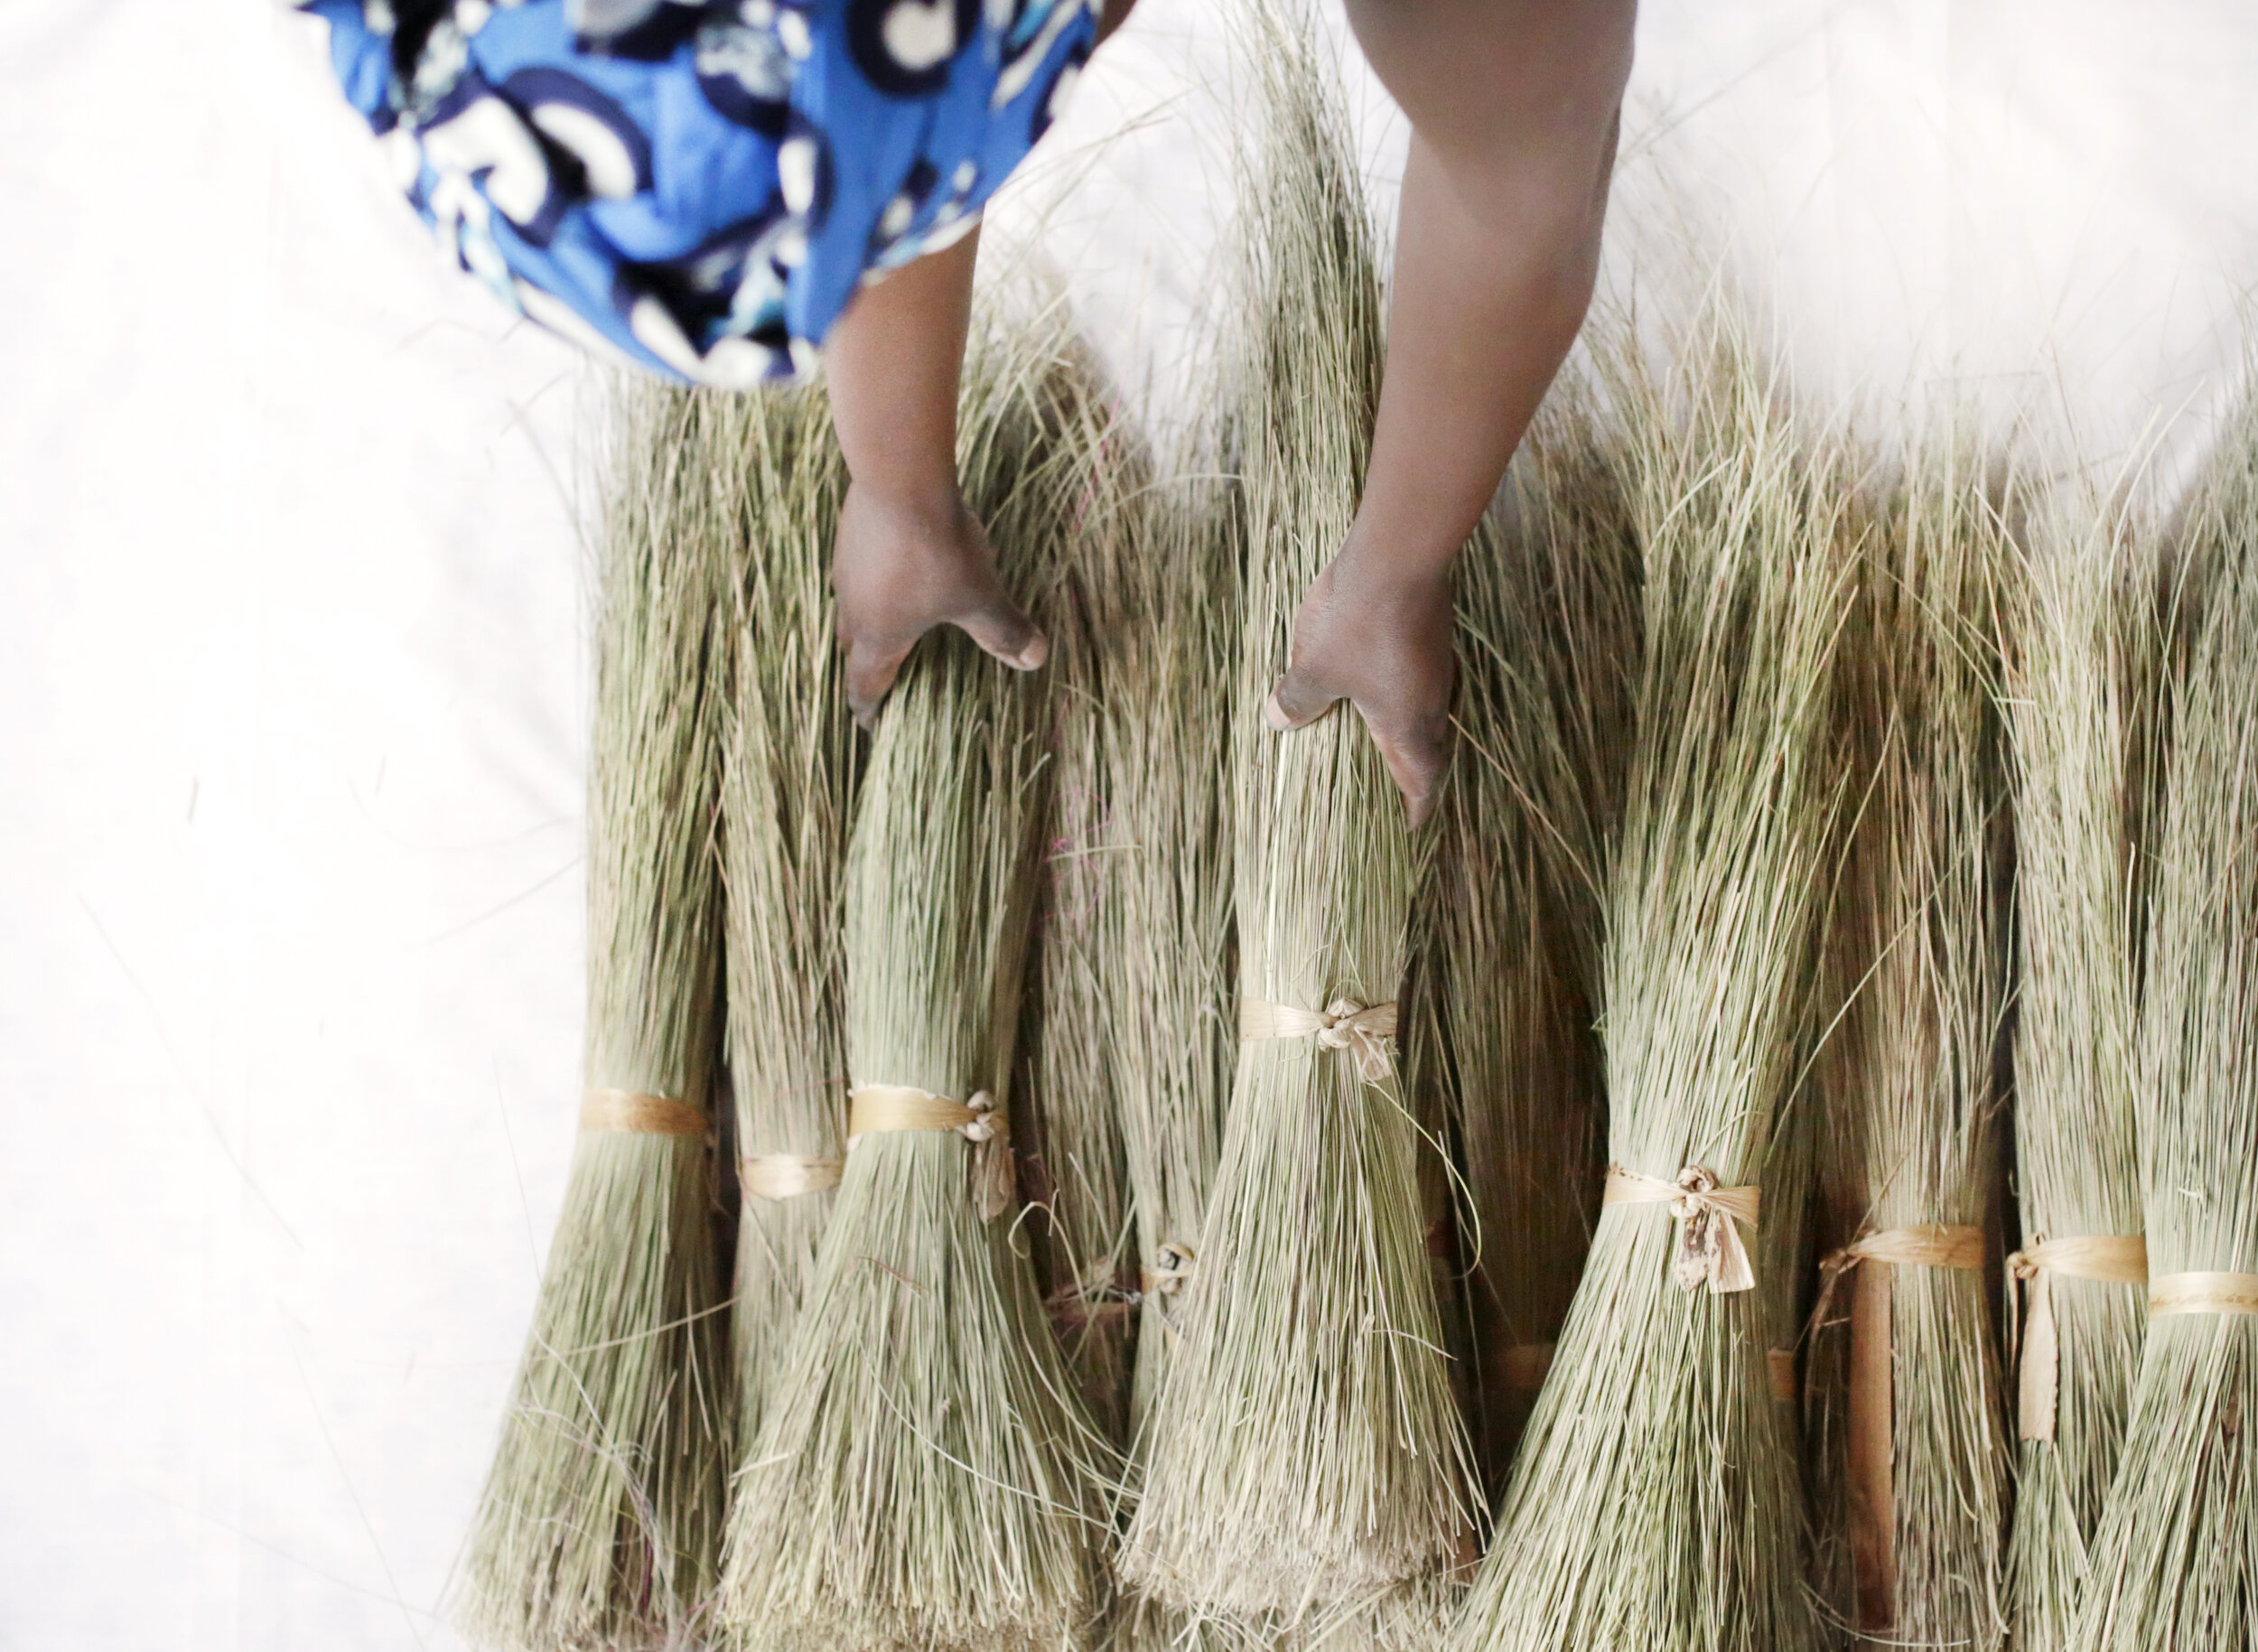  Sweetgrass bundles ready to be woven into baskets at Covanya Cooperative in Rwanda. 